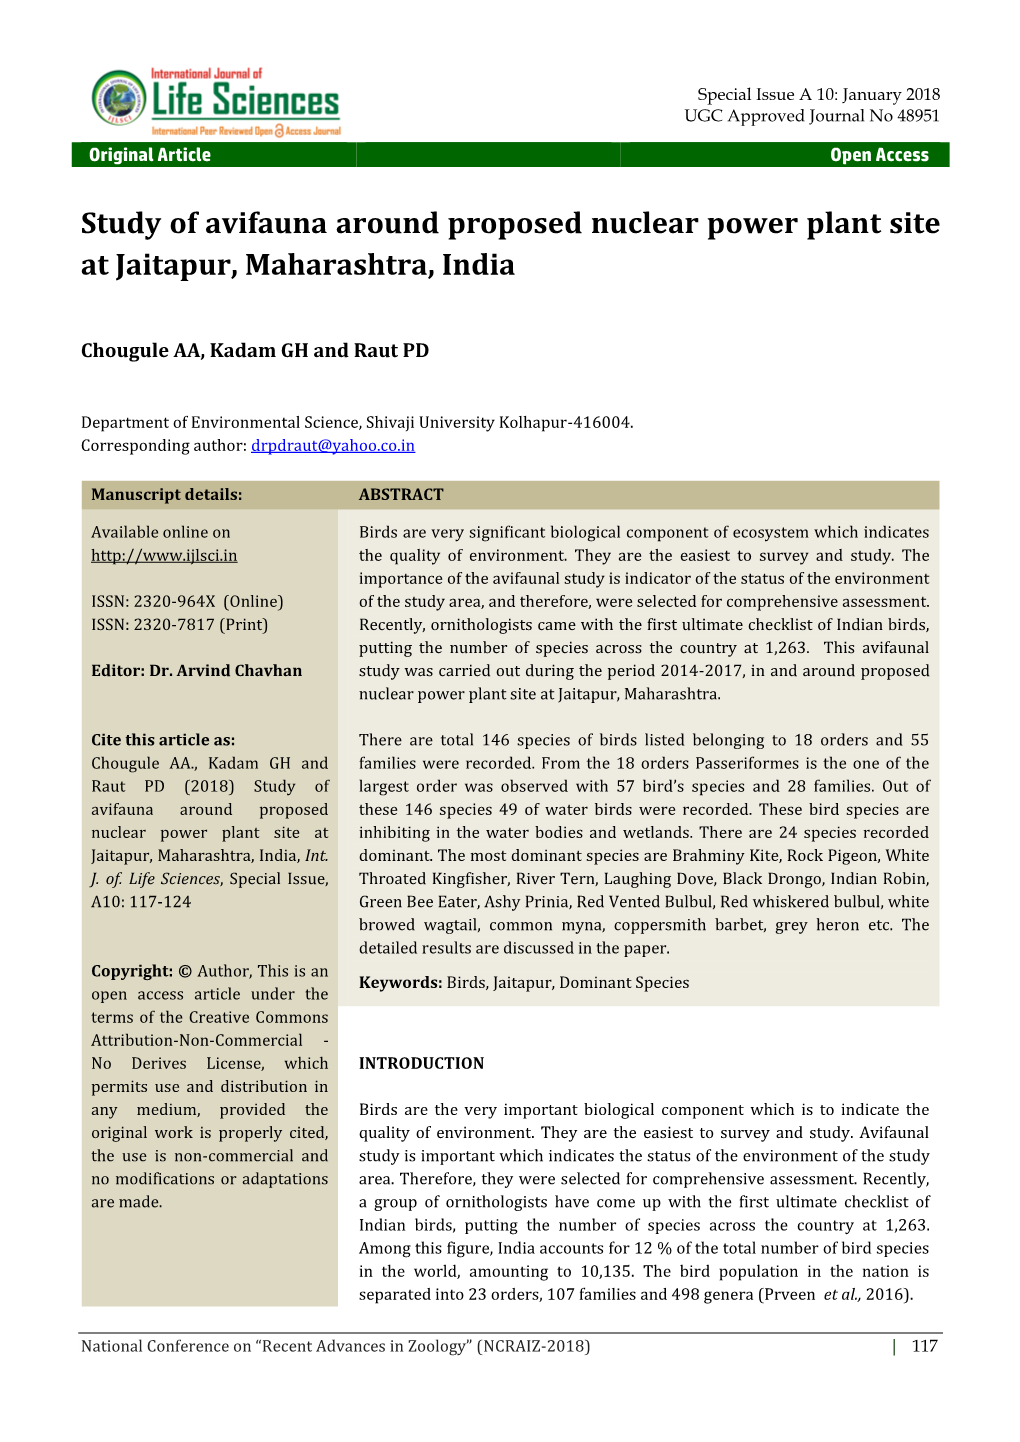 Study of Avifauna Around Proposed Nuclear Power Plant Site at Jaitapur, Maharashtra, India